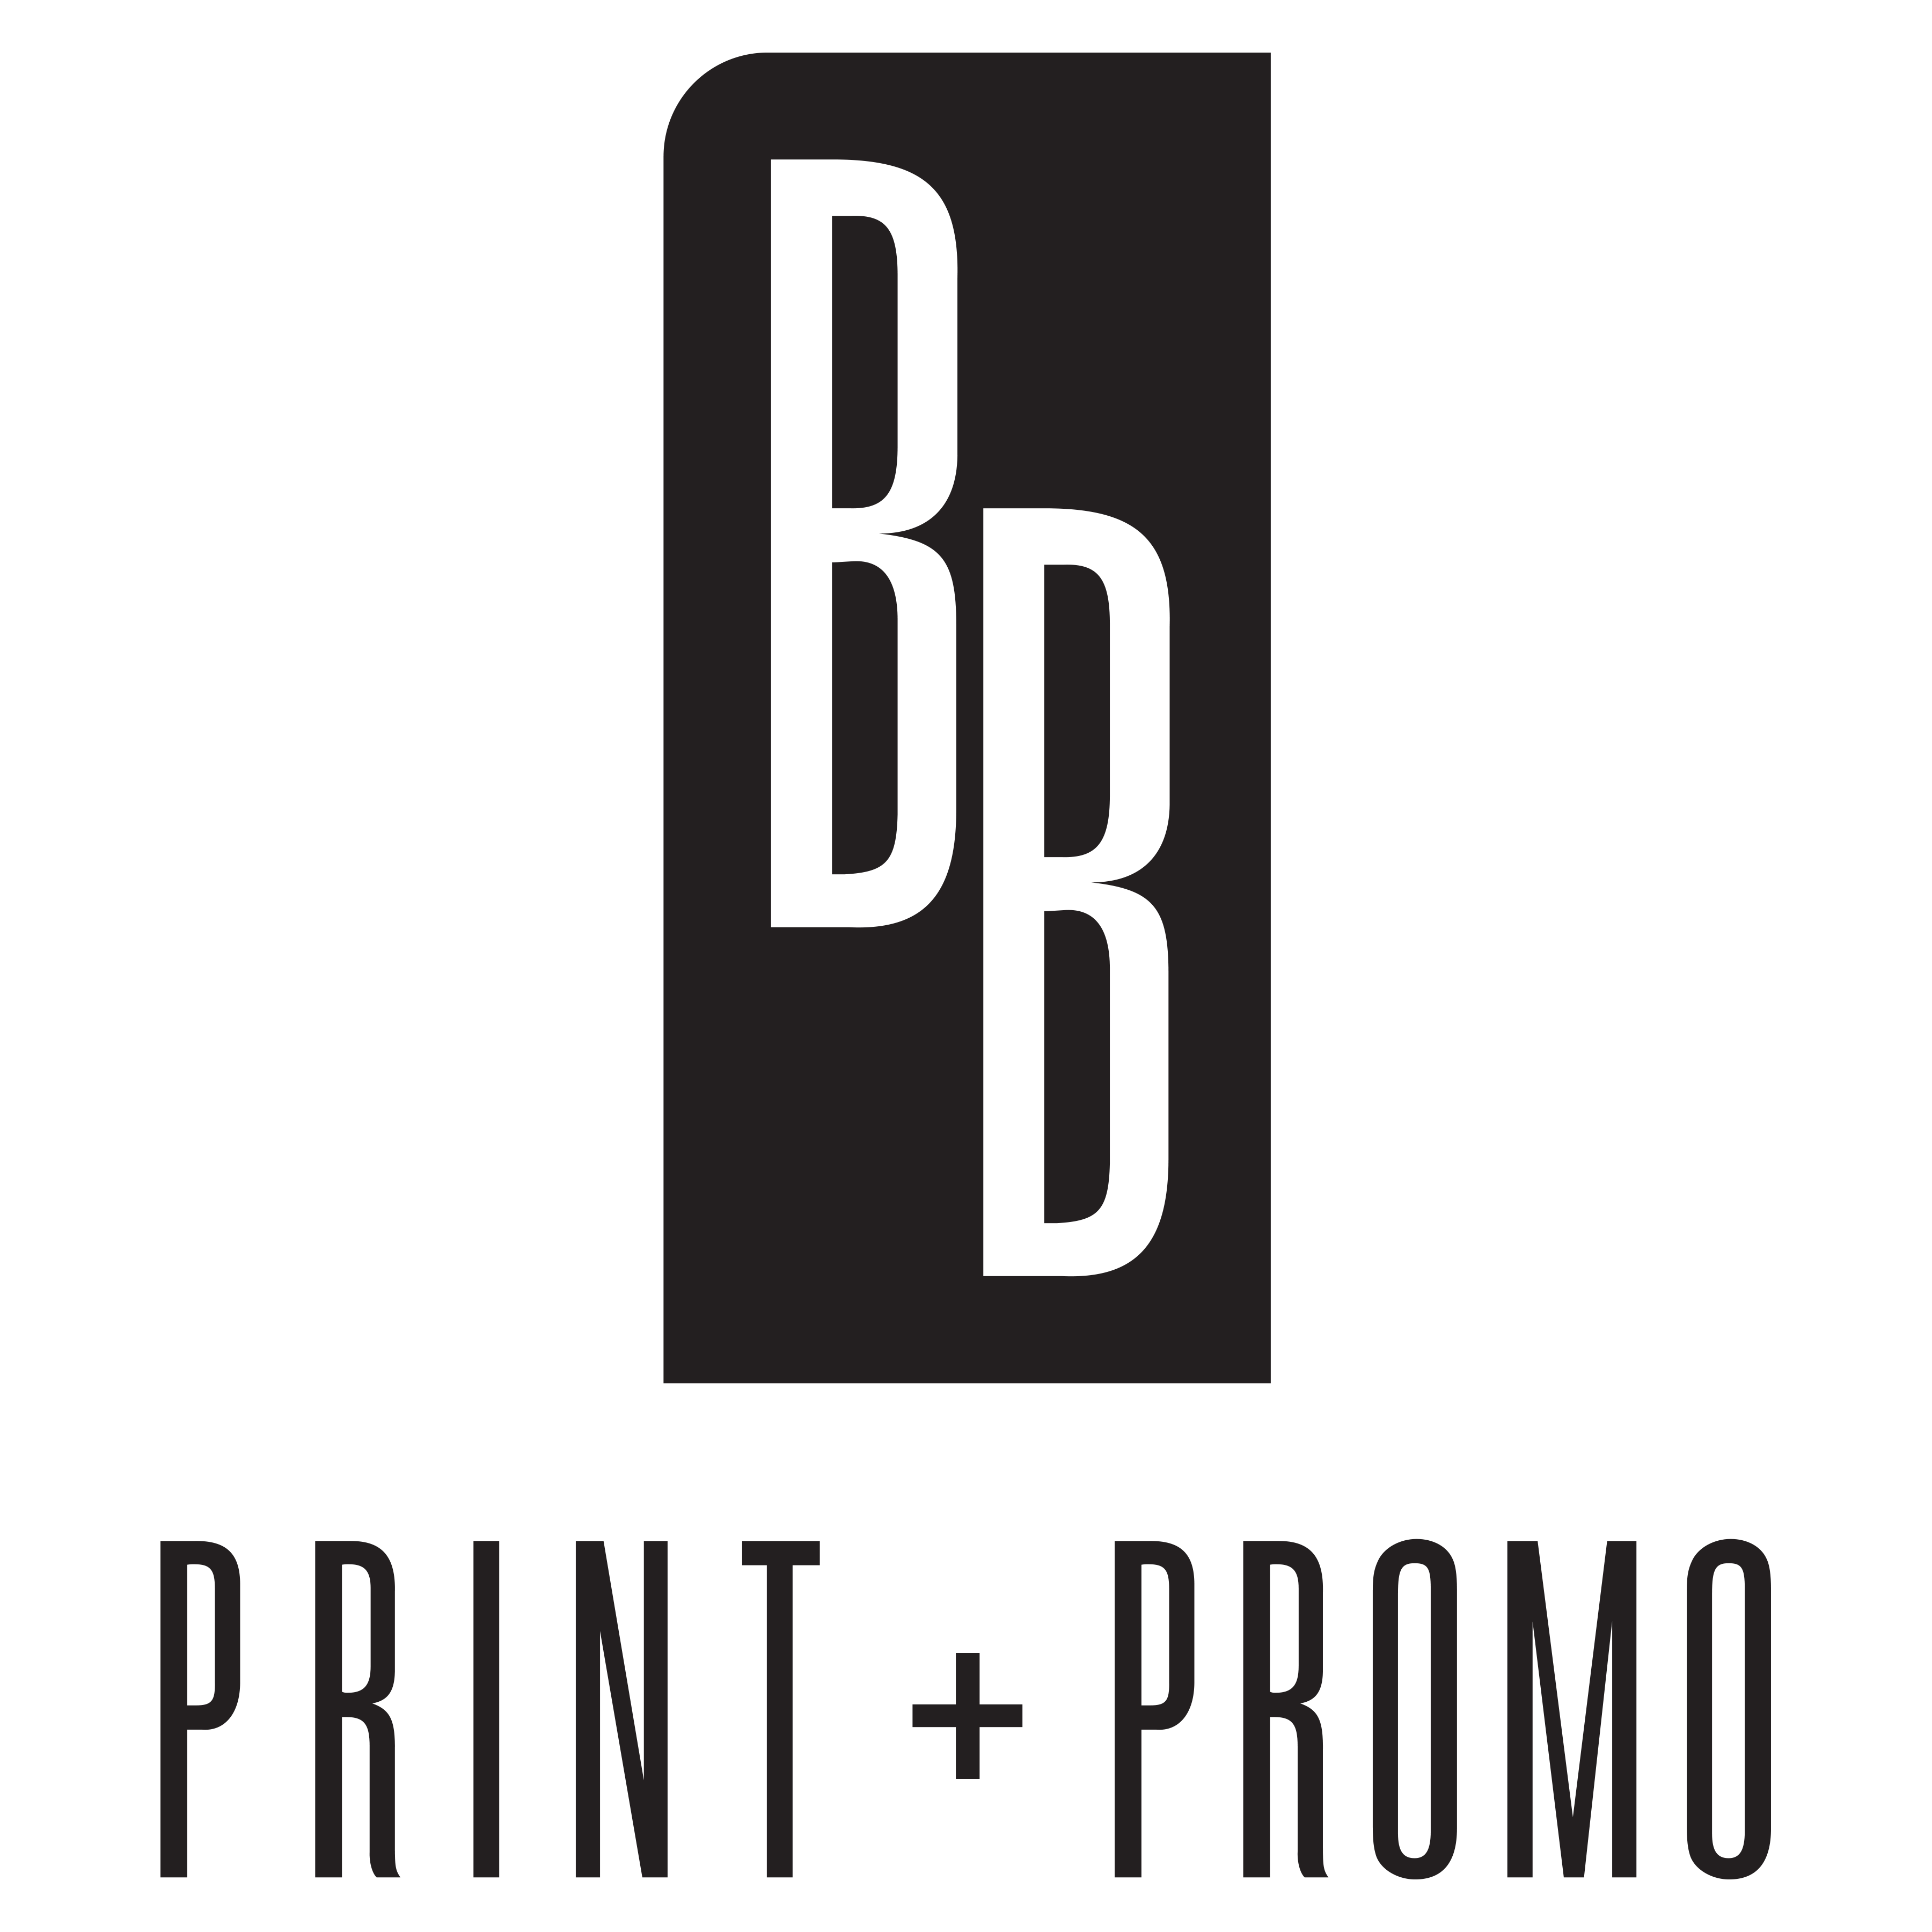 BB Print and Promo, LLC's Logo